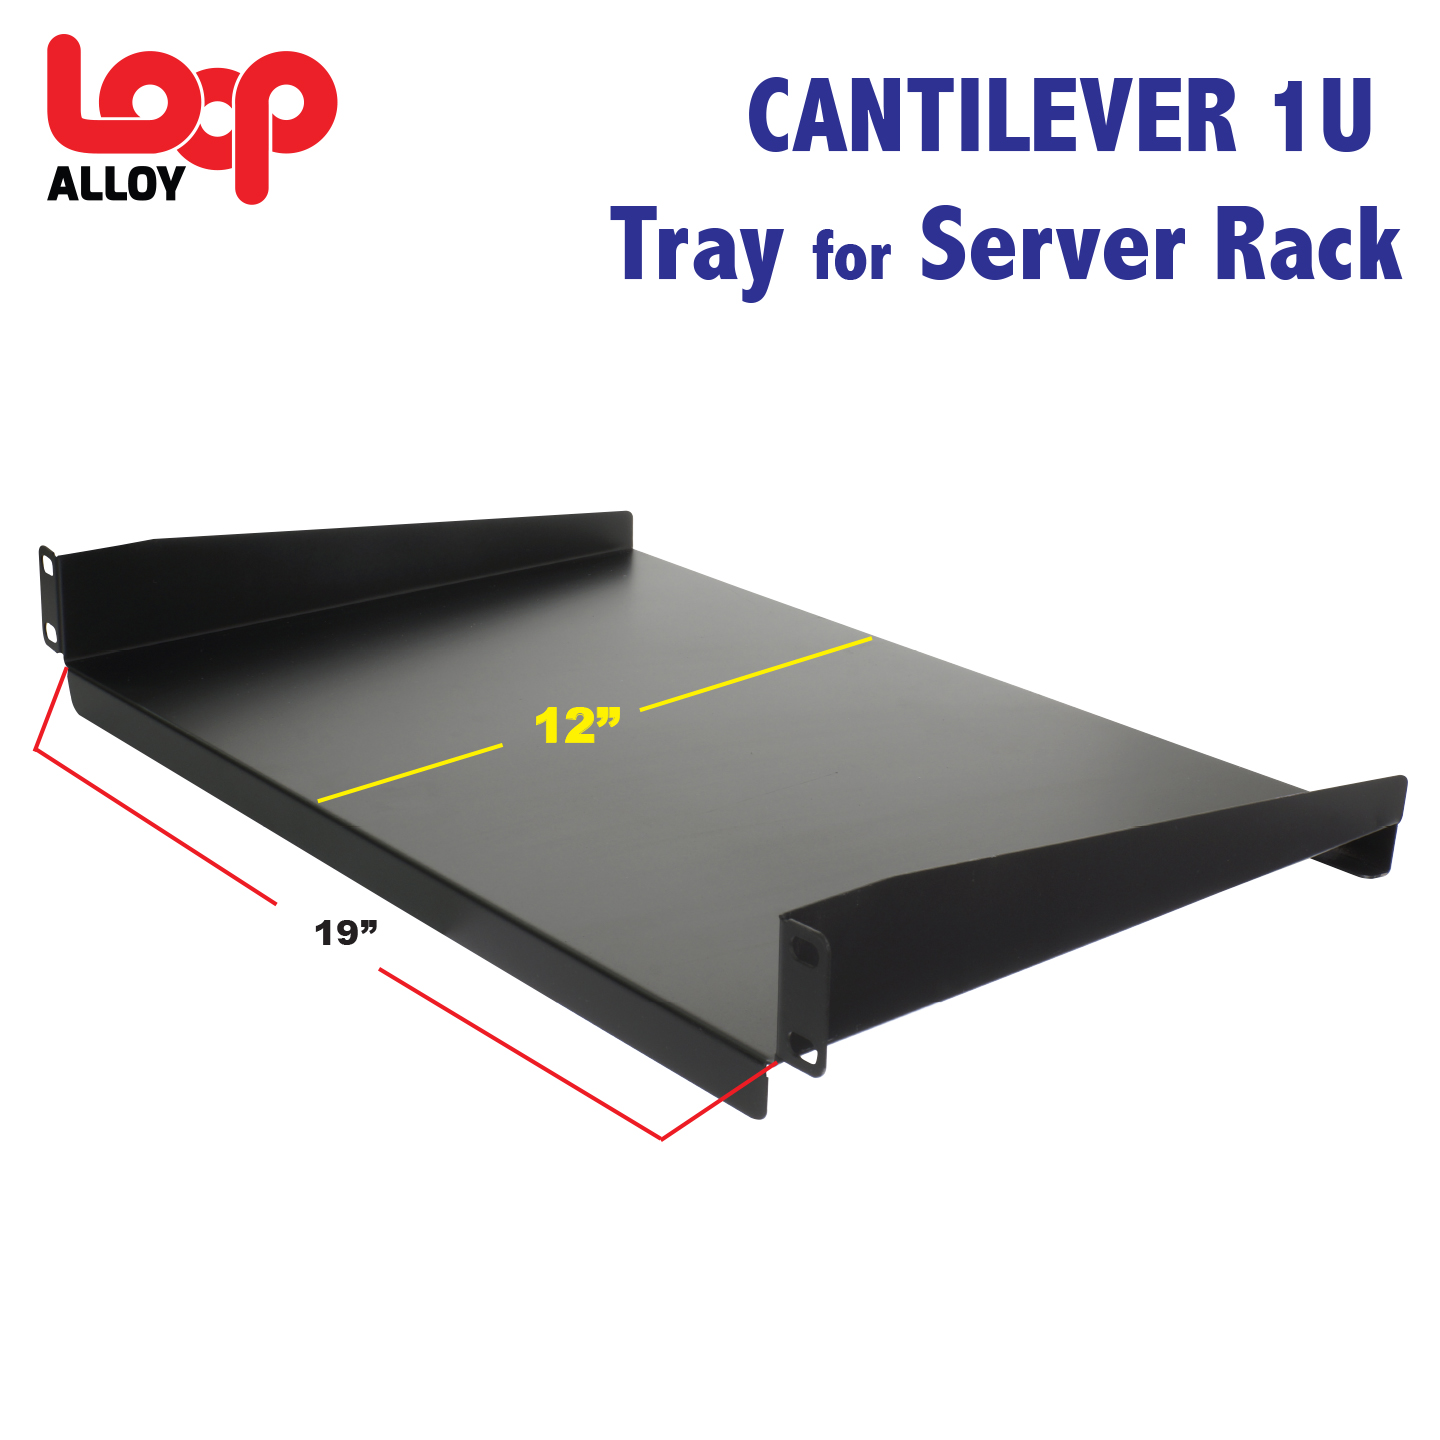 http://loopalloy.com/wp-content/uploads/2018/12/Cantilever-Server-Rack-3.jpg